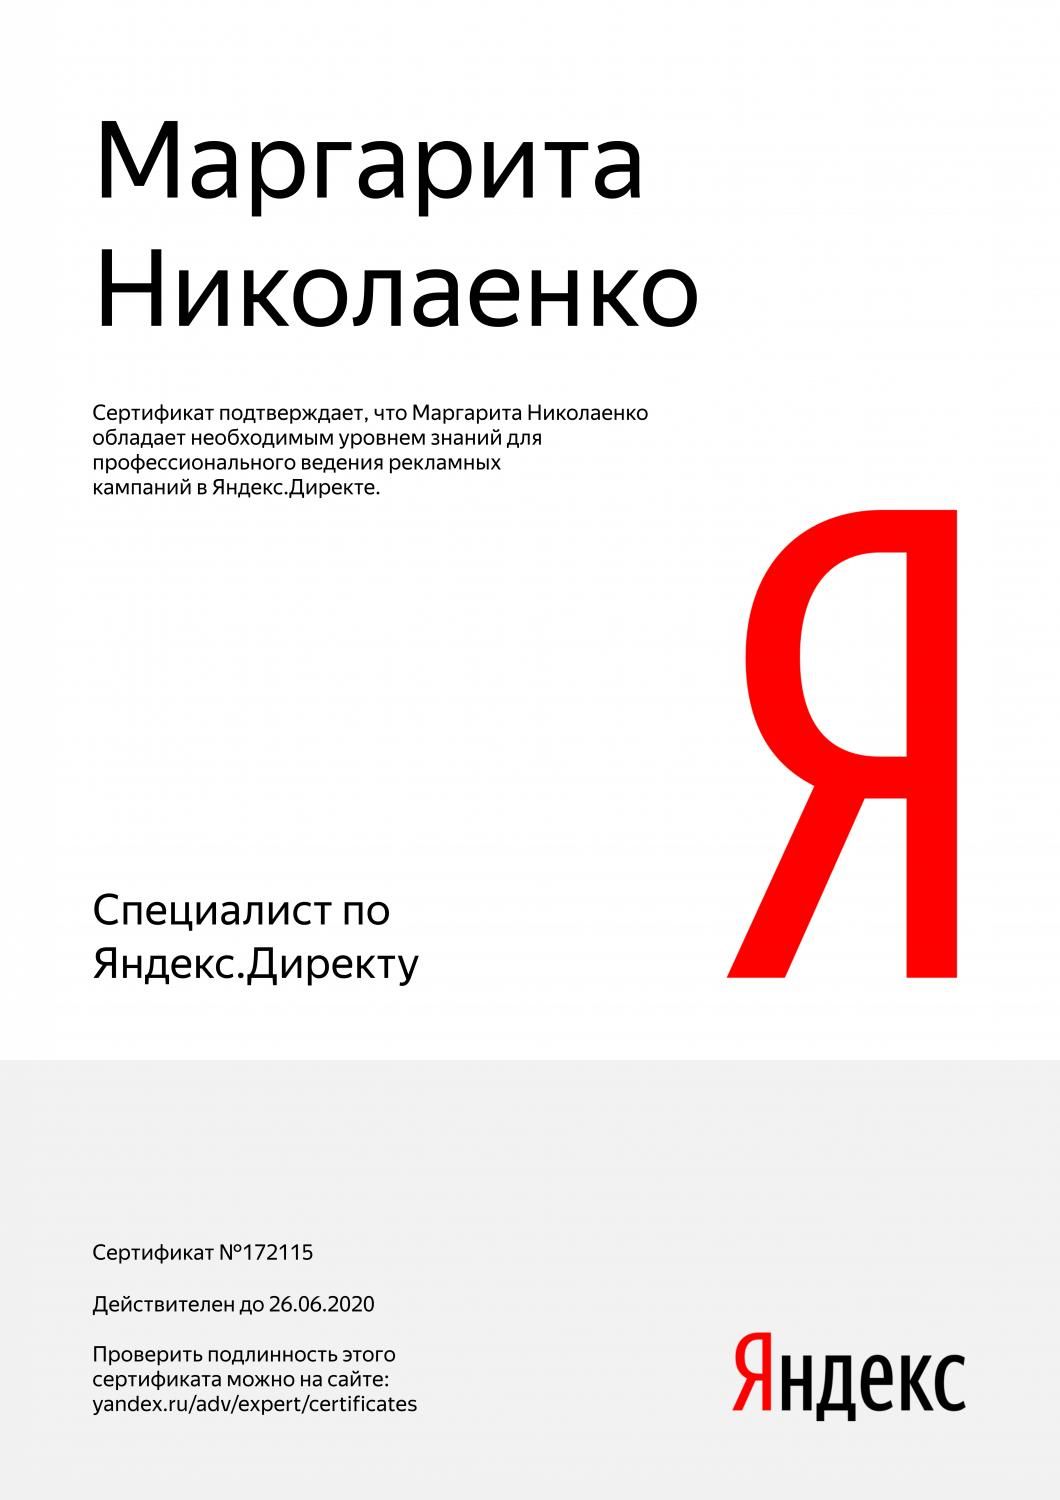 Сертификат специалиста Яндекс. Директ - Николаенко М. в Тулы